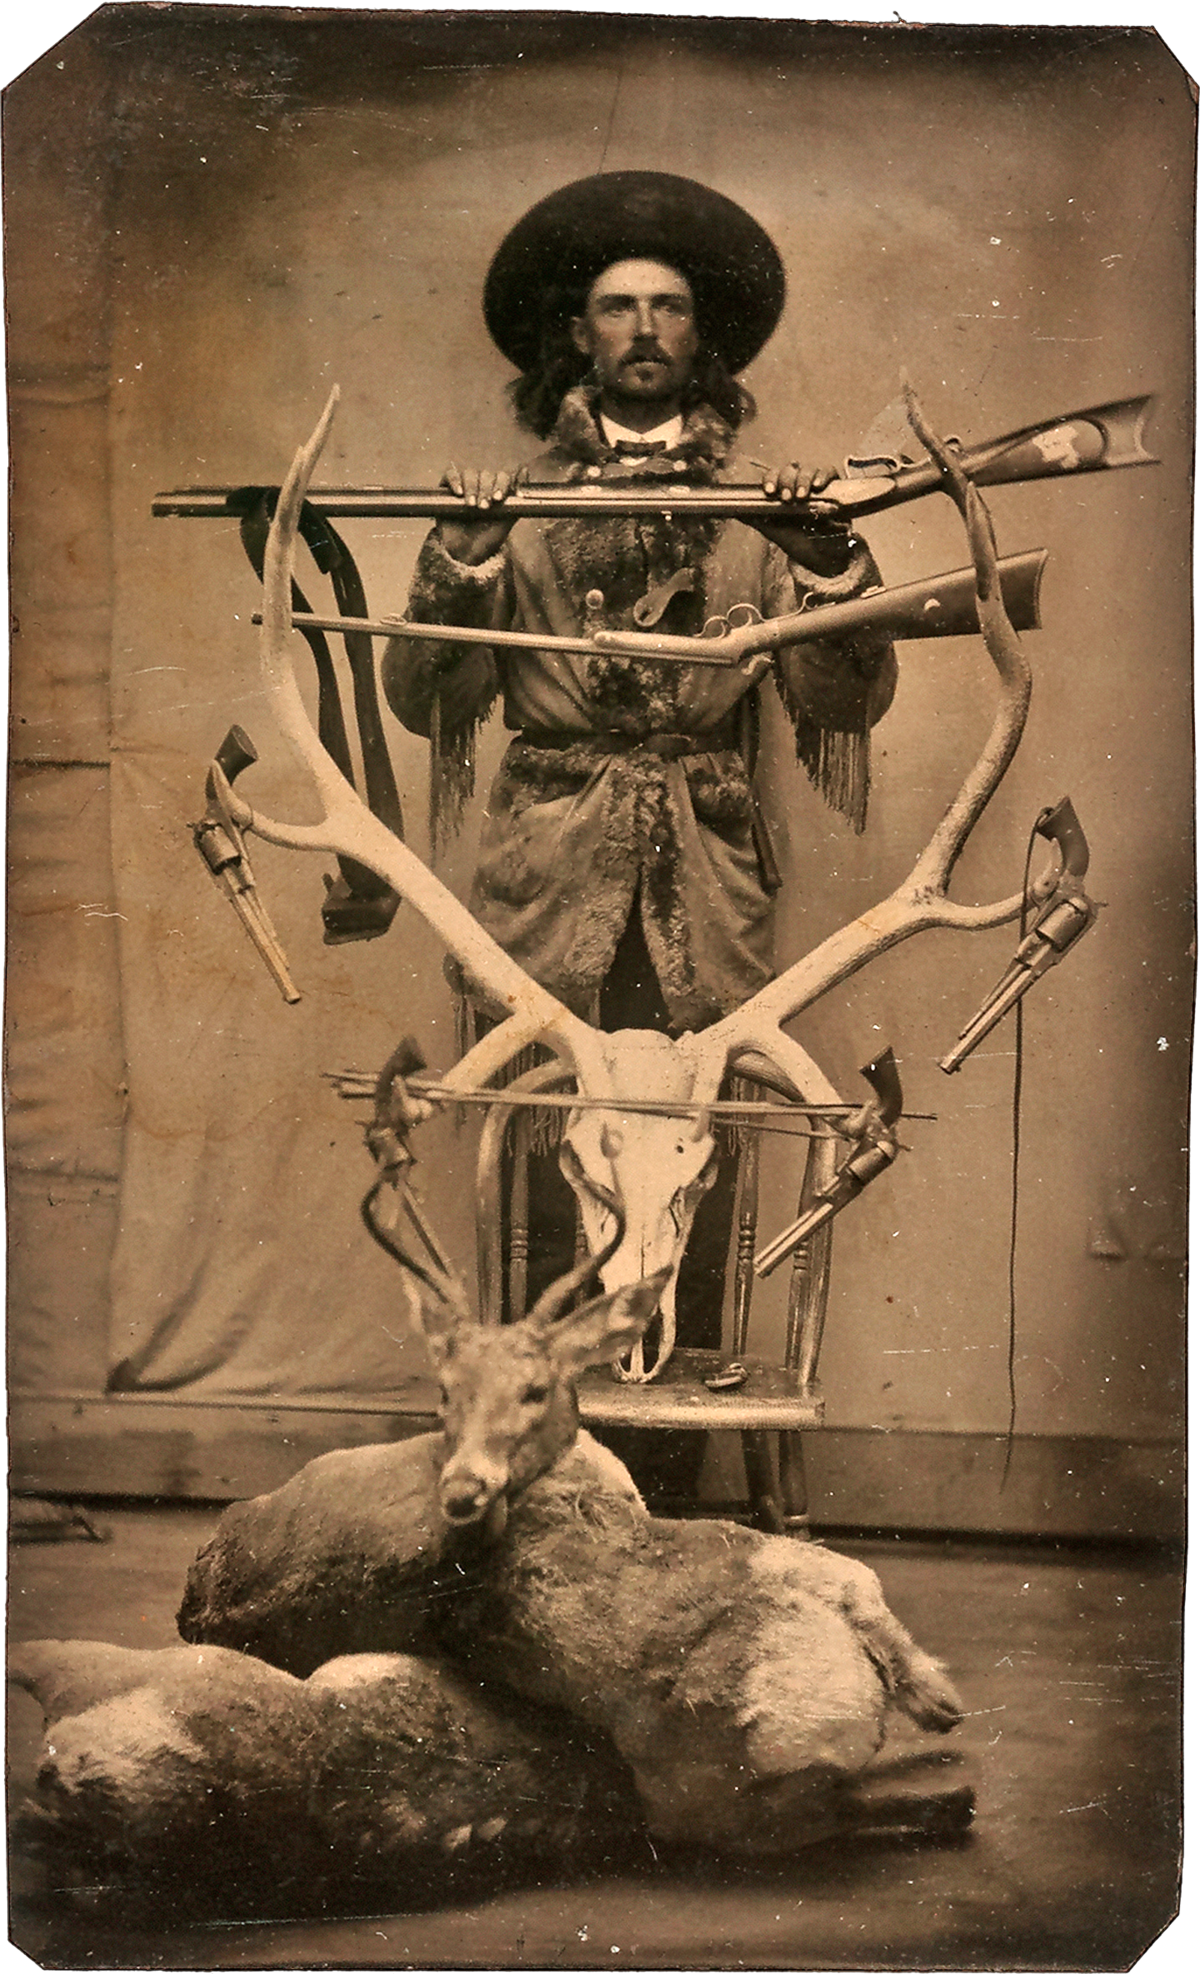 Buffalo Bill Cody in the early 1870s